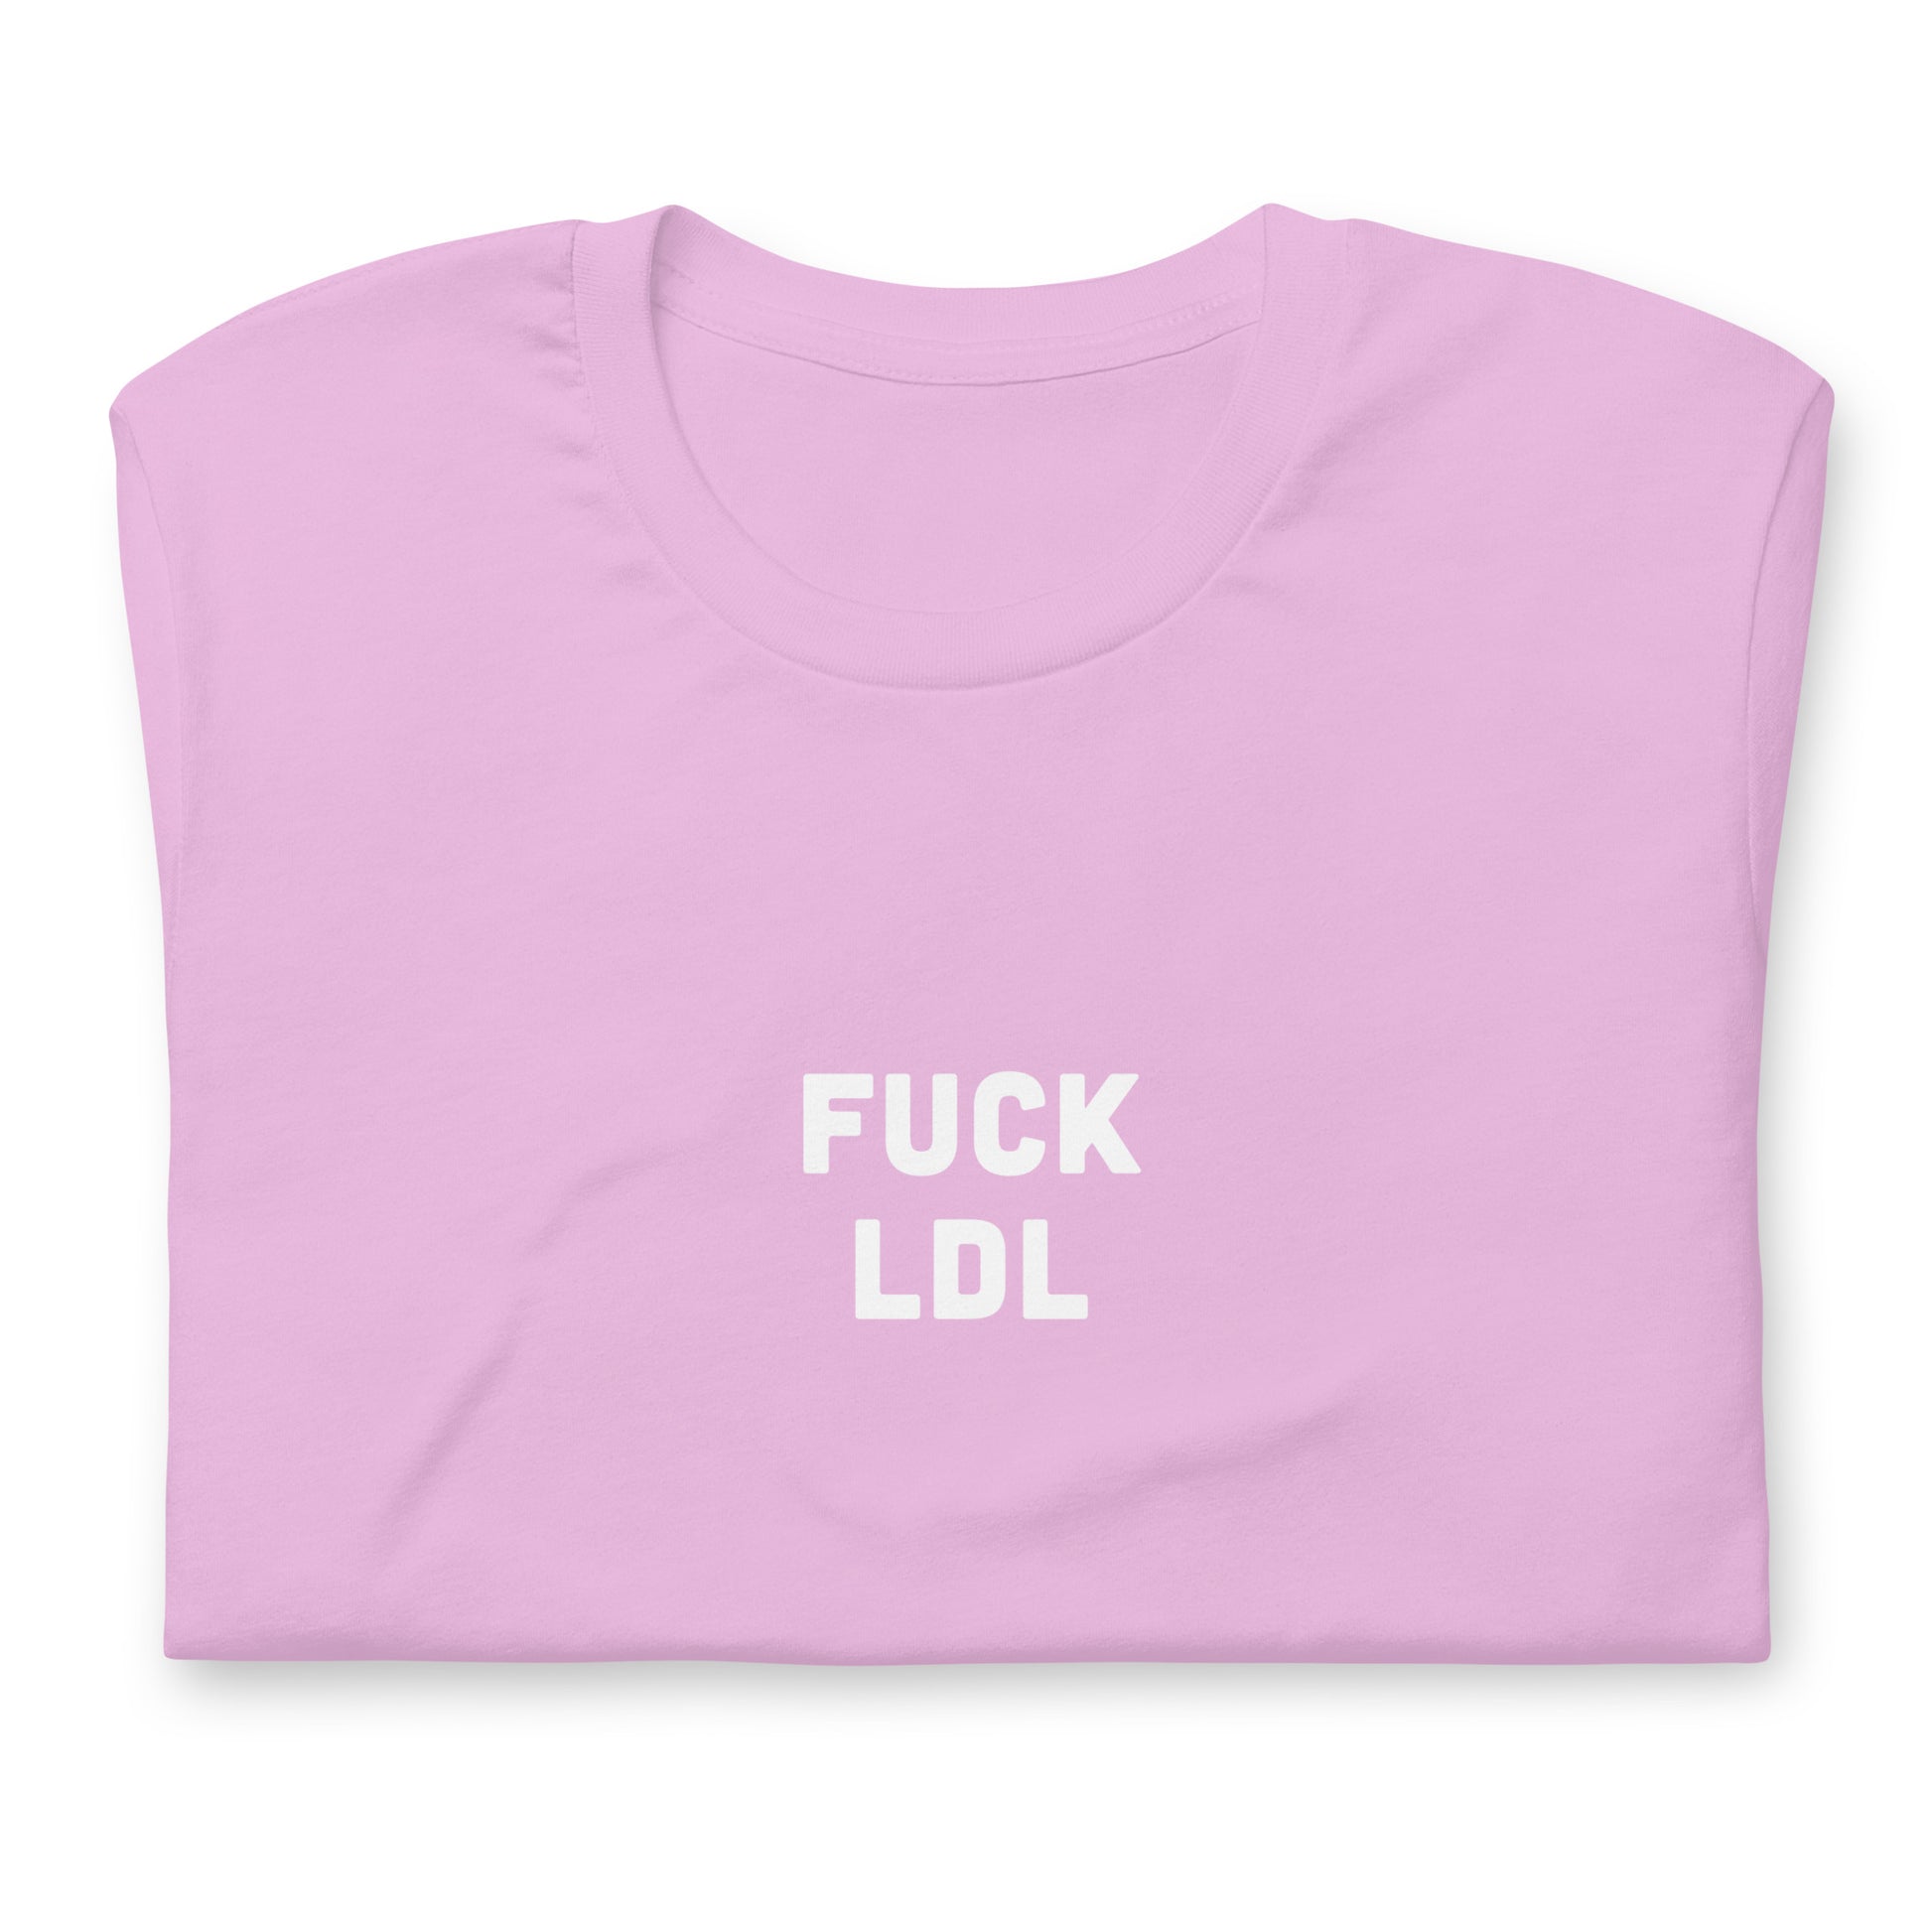 Fuck Ldl T-Shirt Size 2XL Color Forest